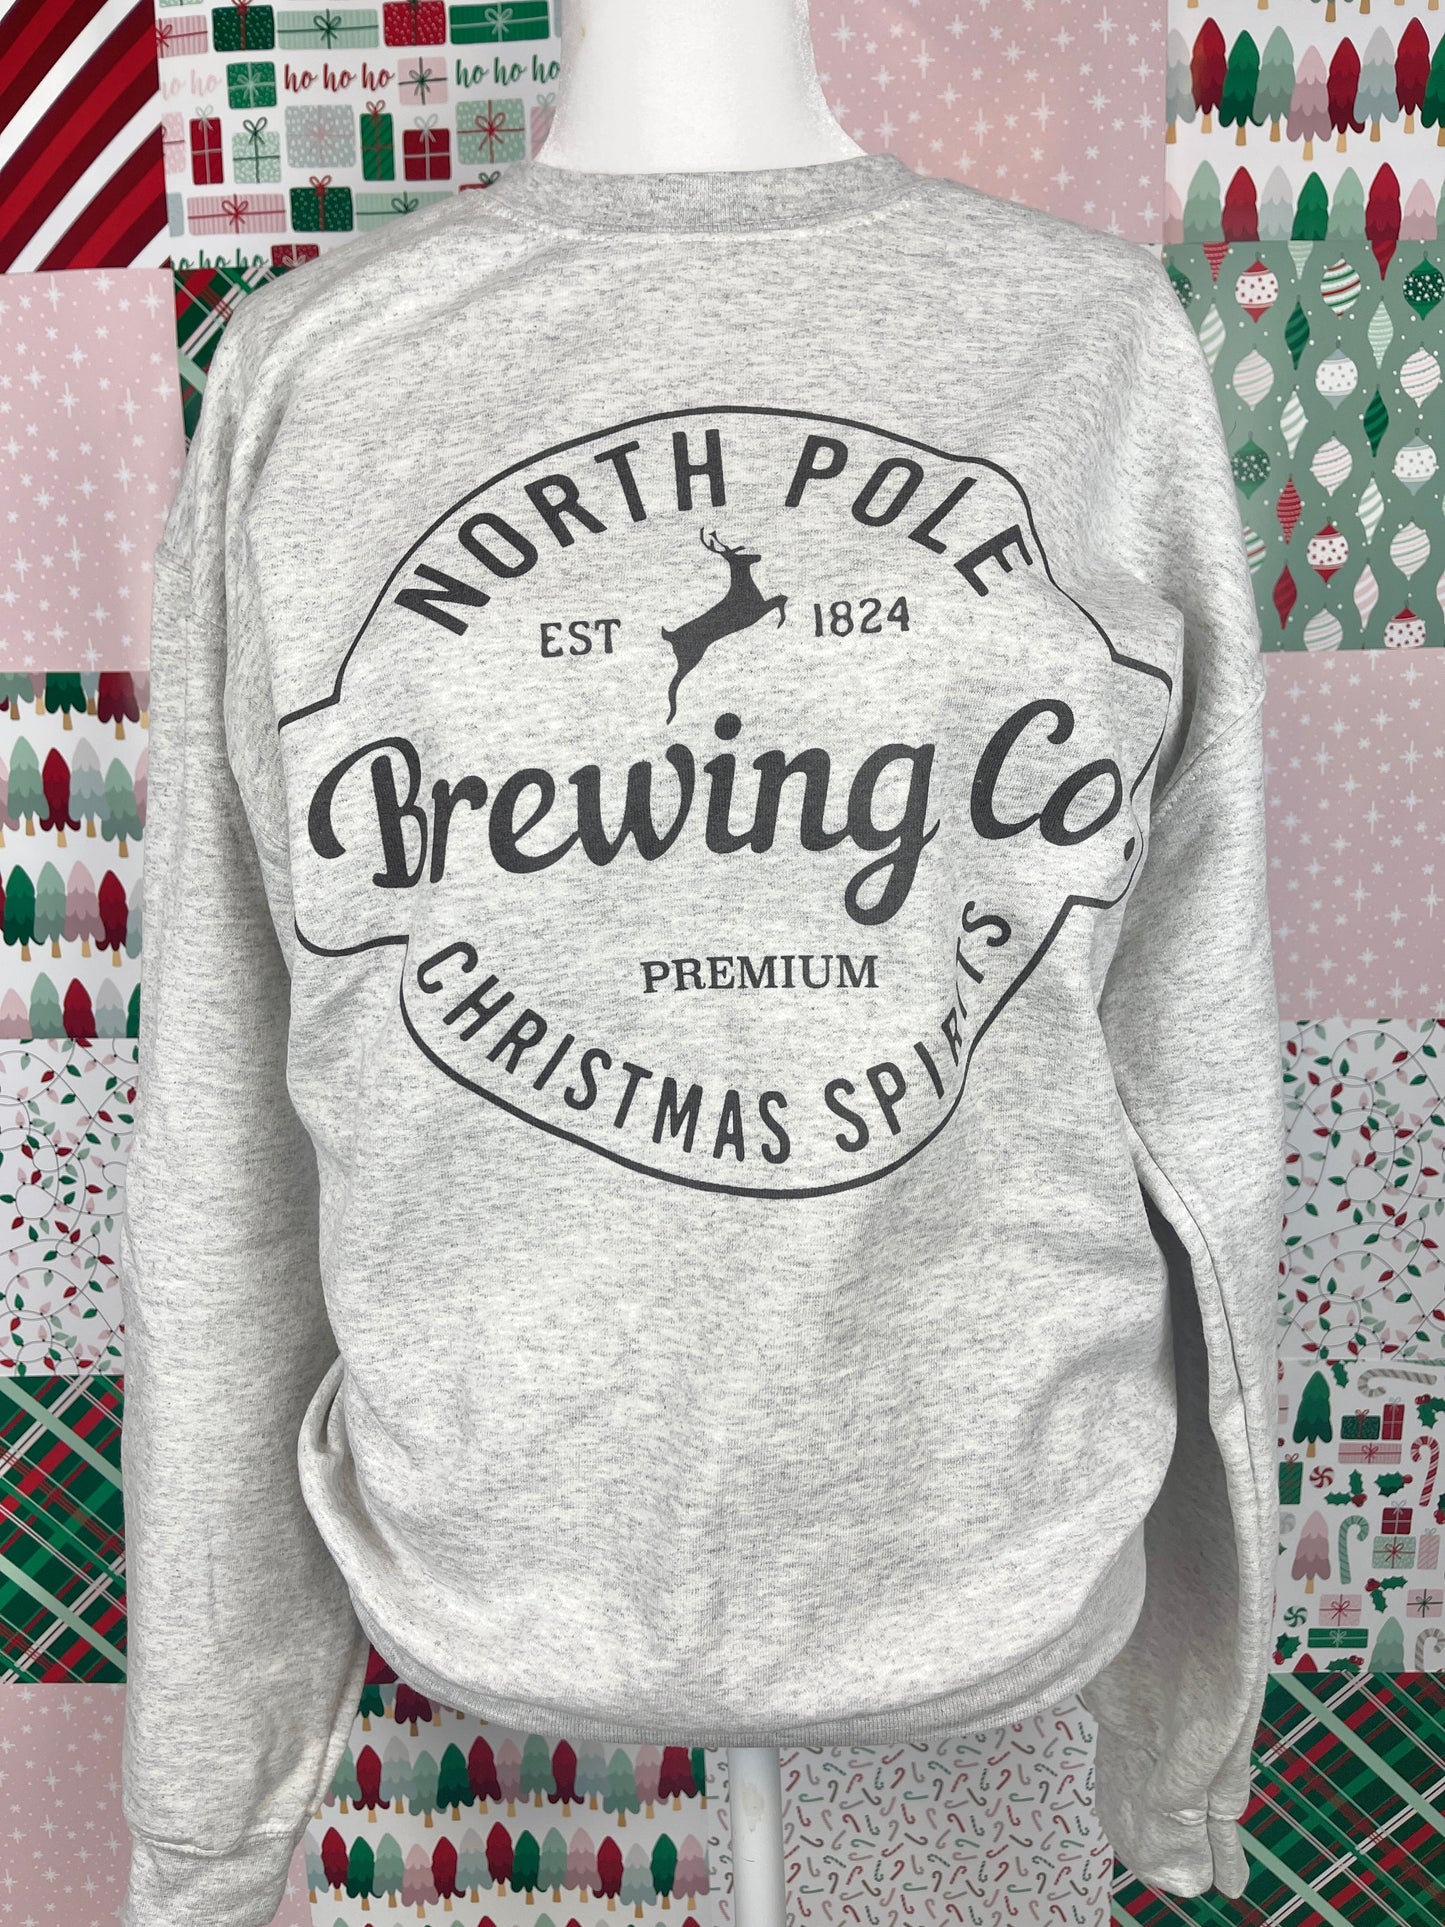 North Pole Brewing Co